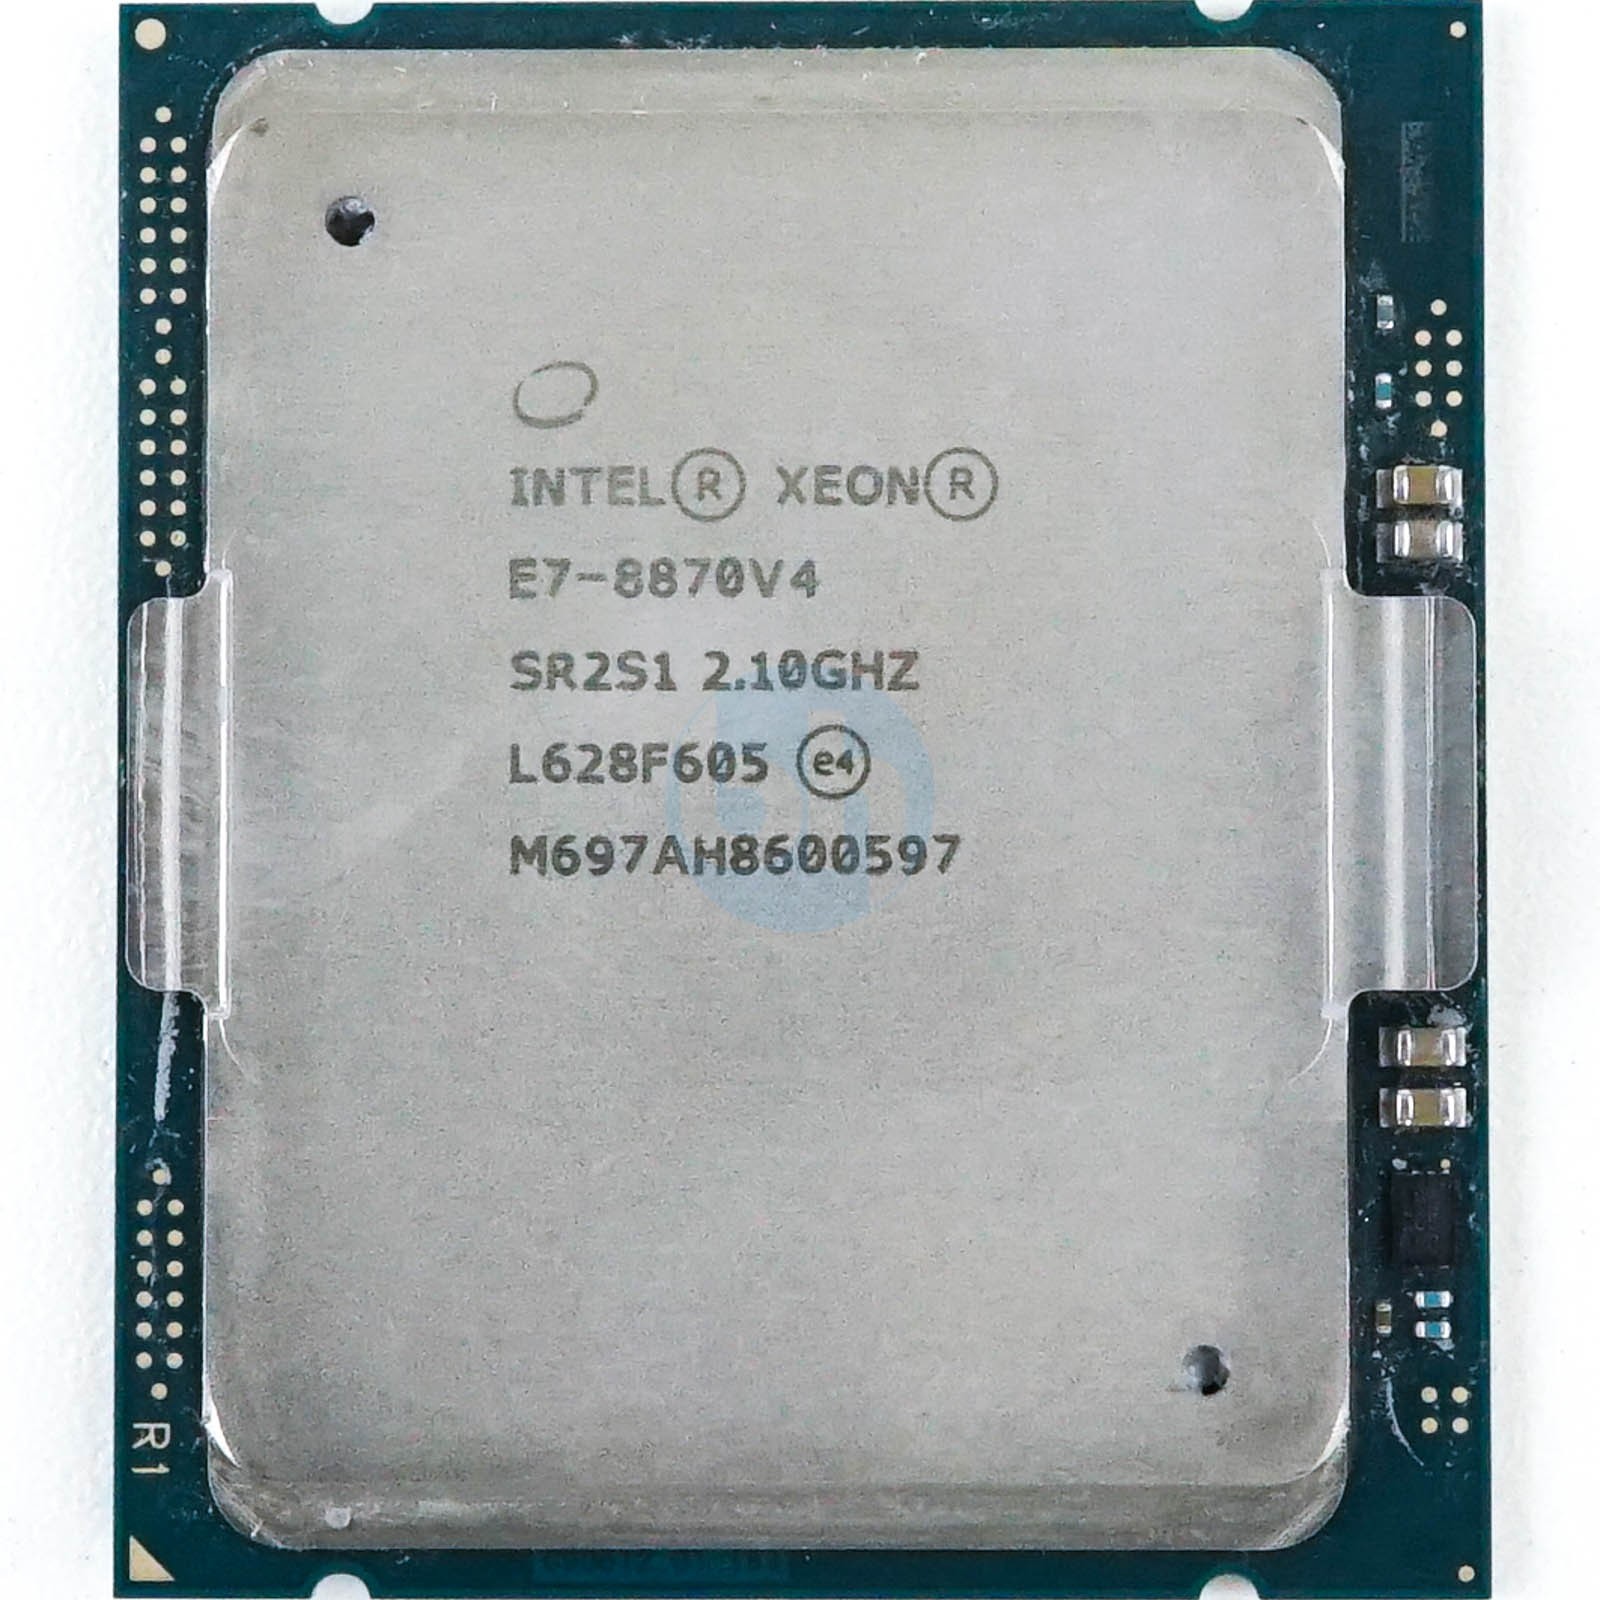 Intel Xeon E7-8870 V4 (SR2S1) - 20-Core 2.10GHz LGA2011-1 50MB 140W CPU